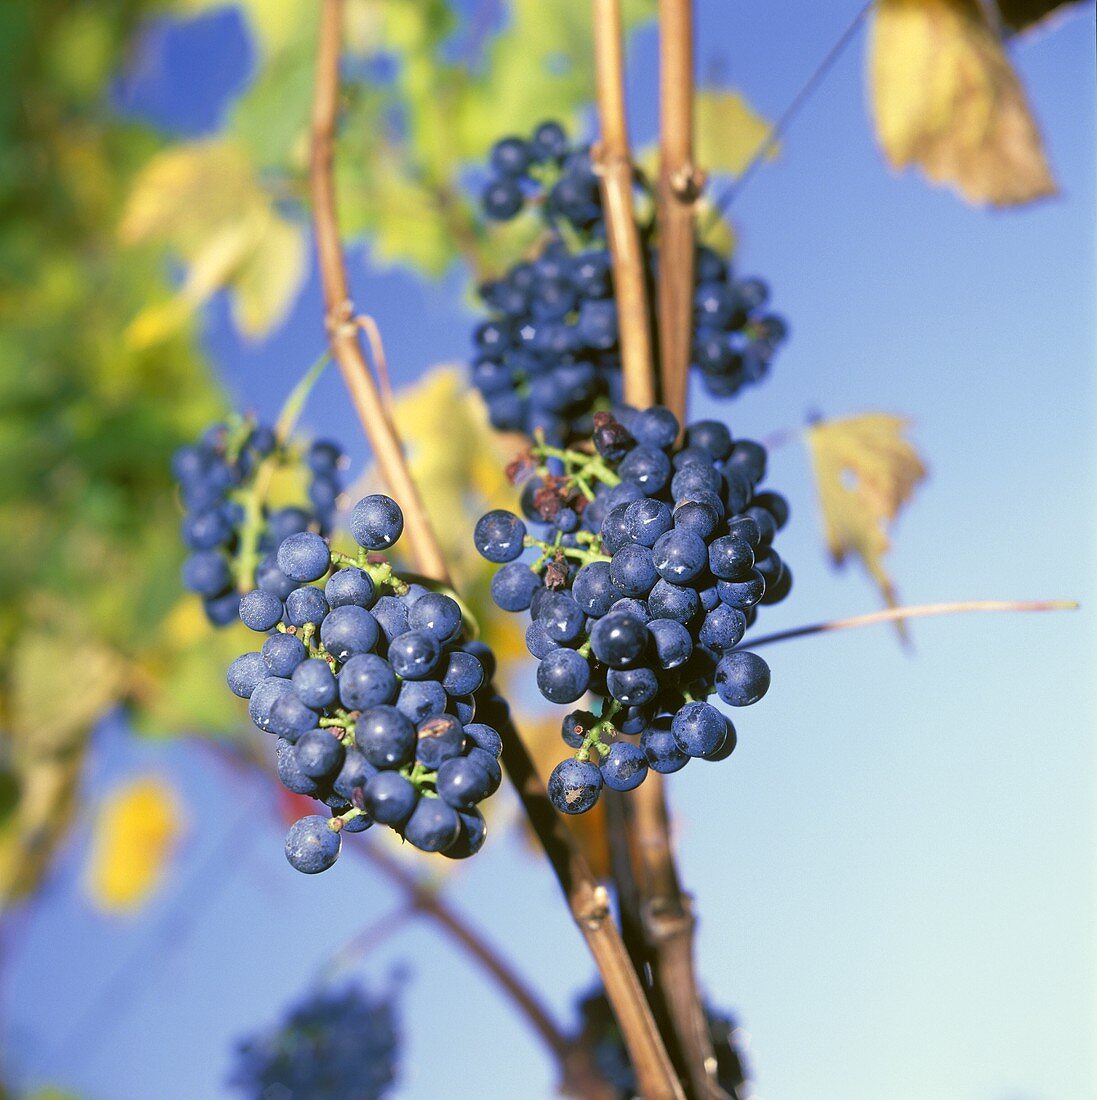 Red wine grapes (Vernatsch variety), common in S. Tyrol